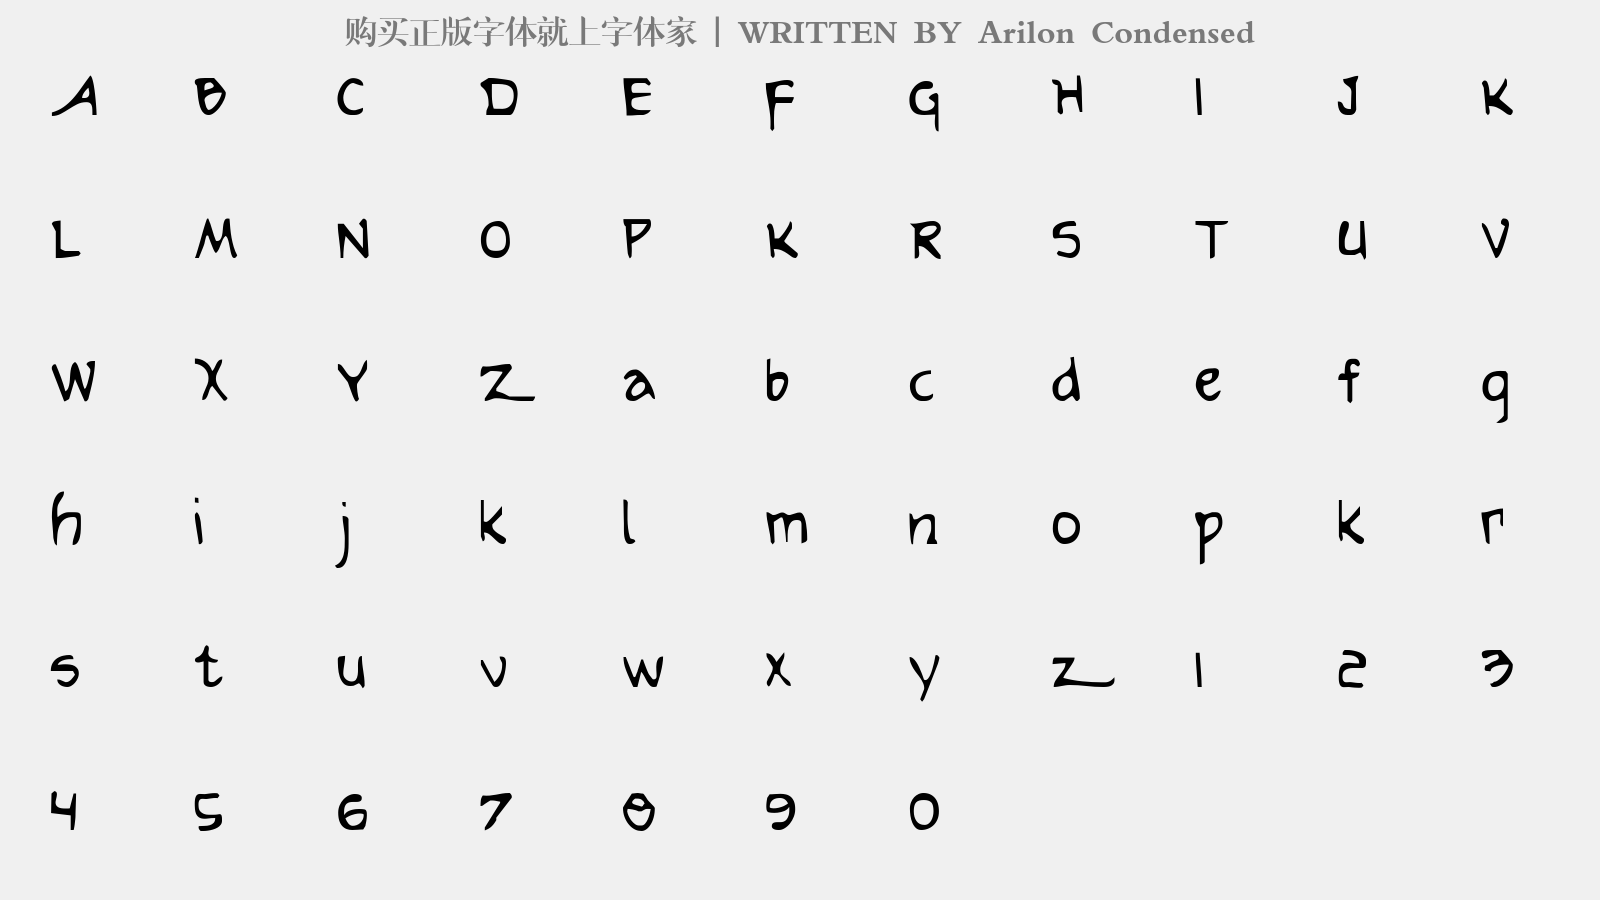 Arilon Condensed - 大写字母/小写字母/数字